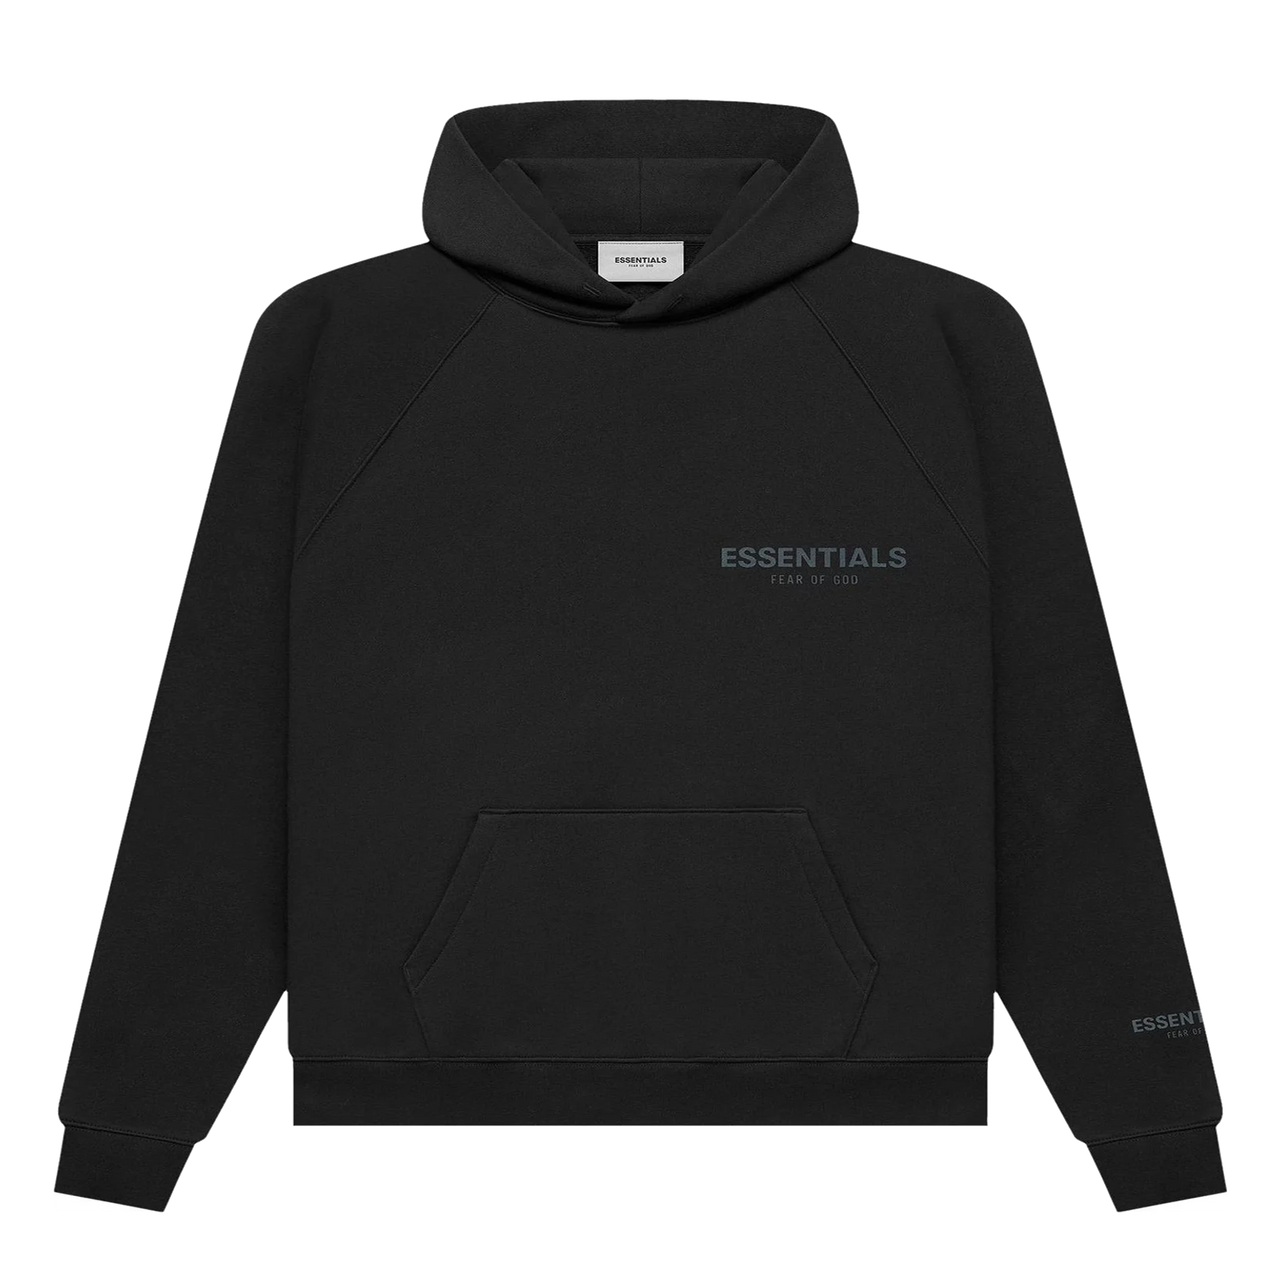 Essentials SS21 Core Sweatshirt Black